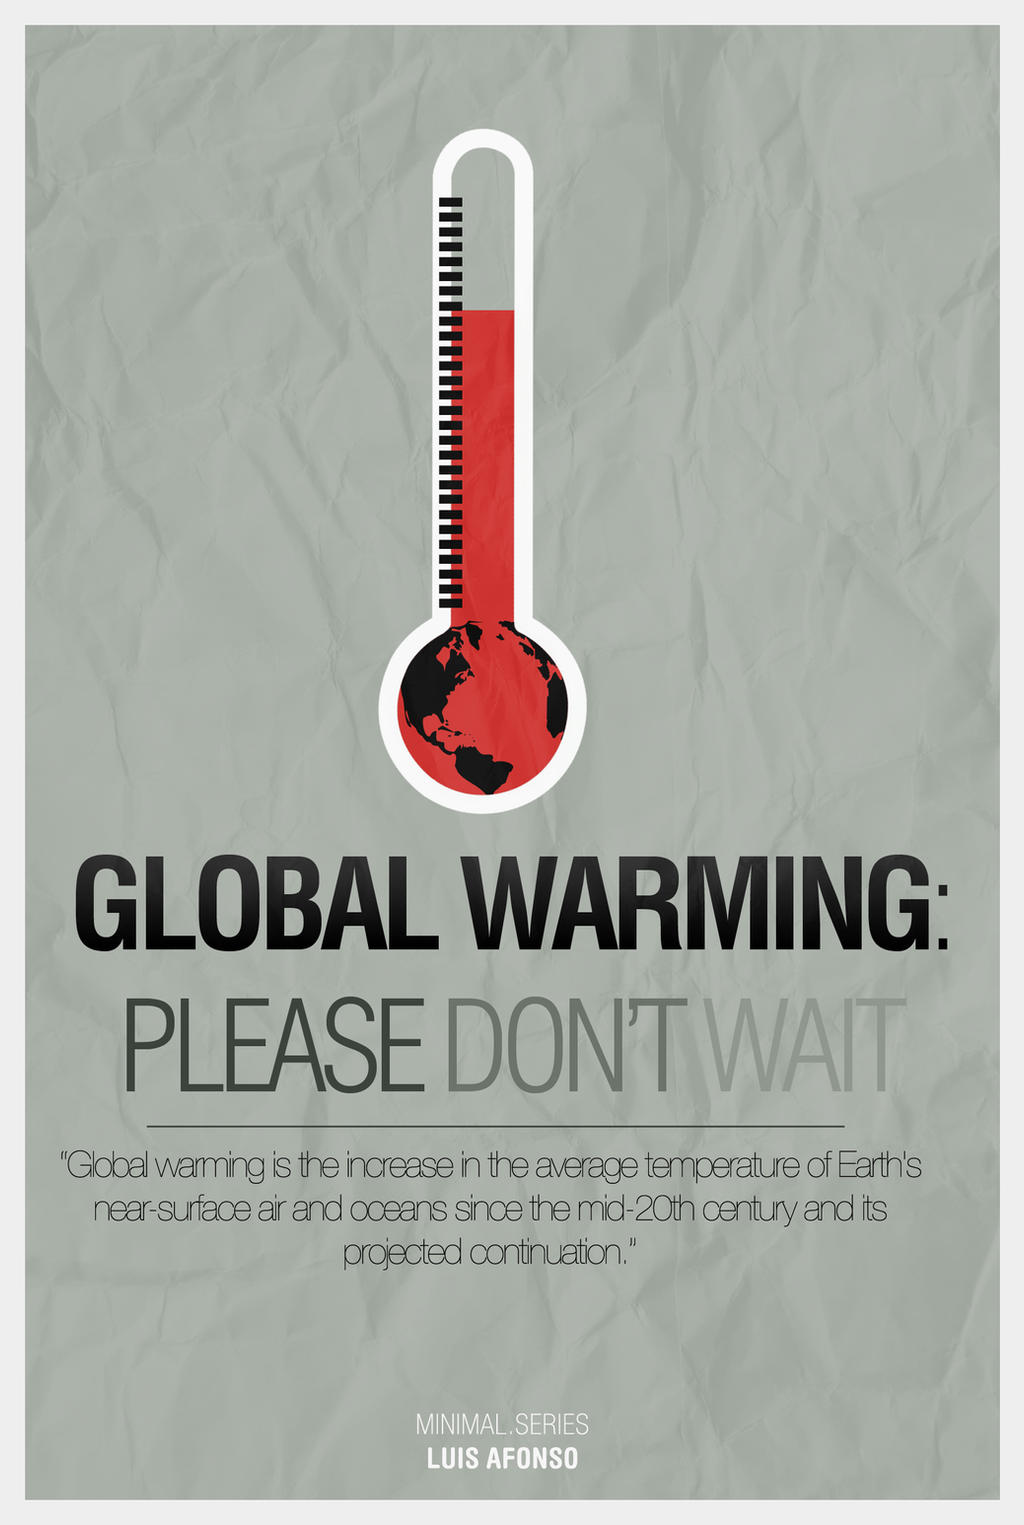 Global Warming: Don't Wait